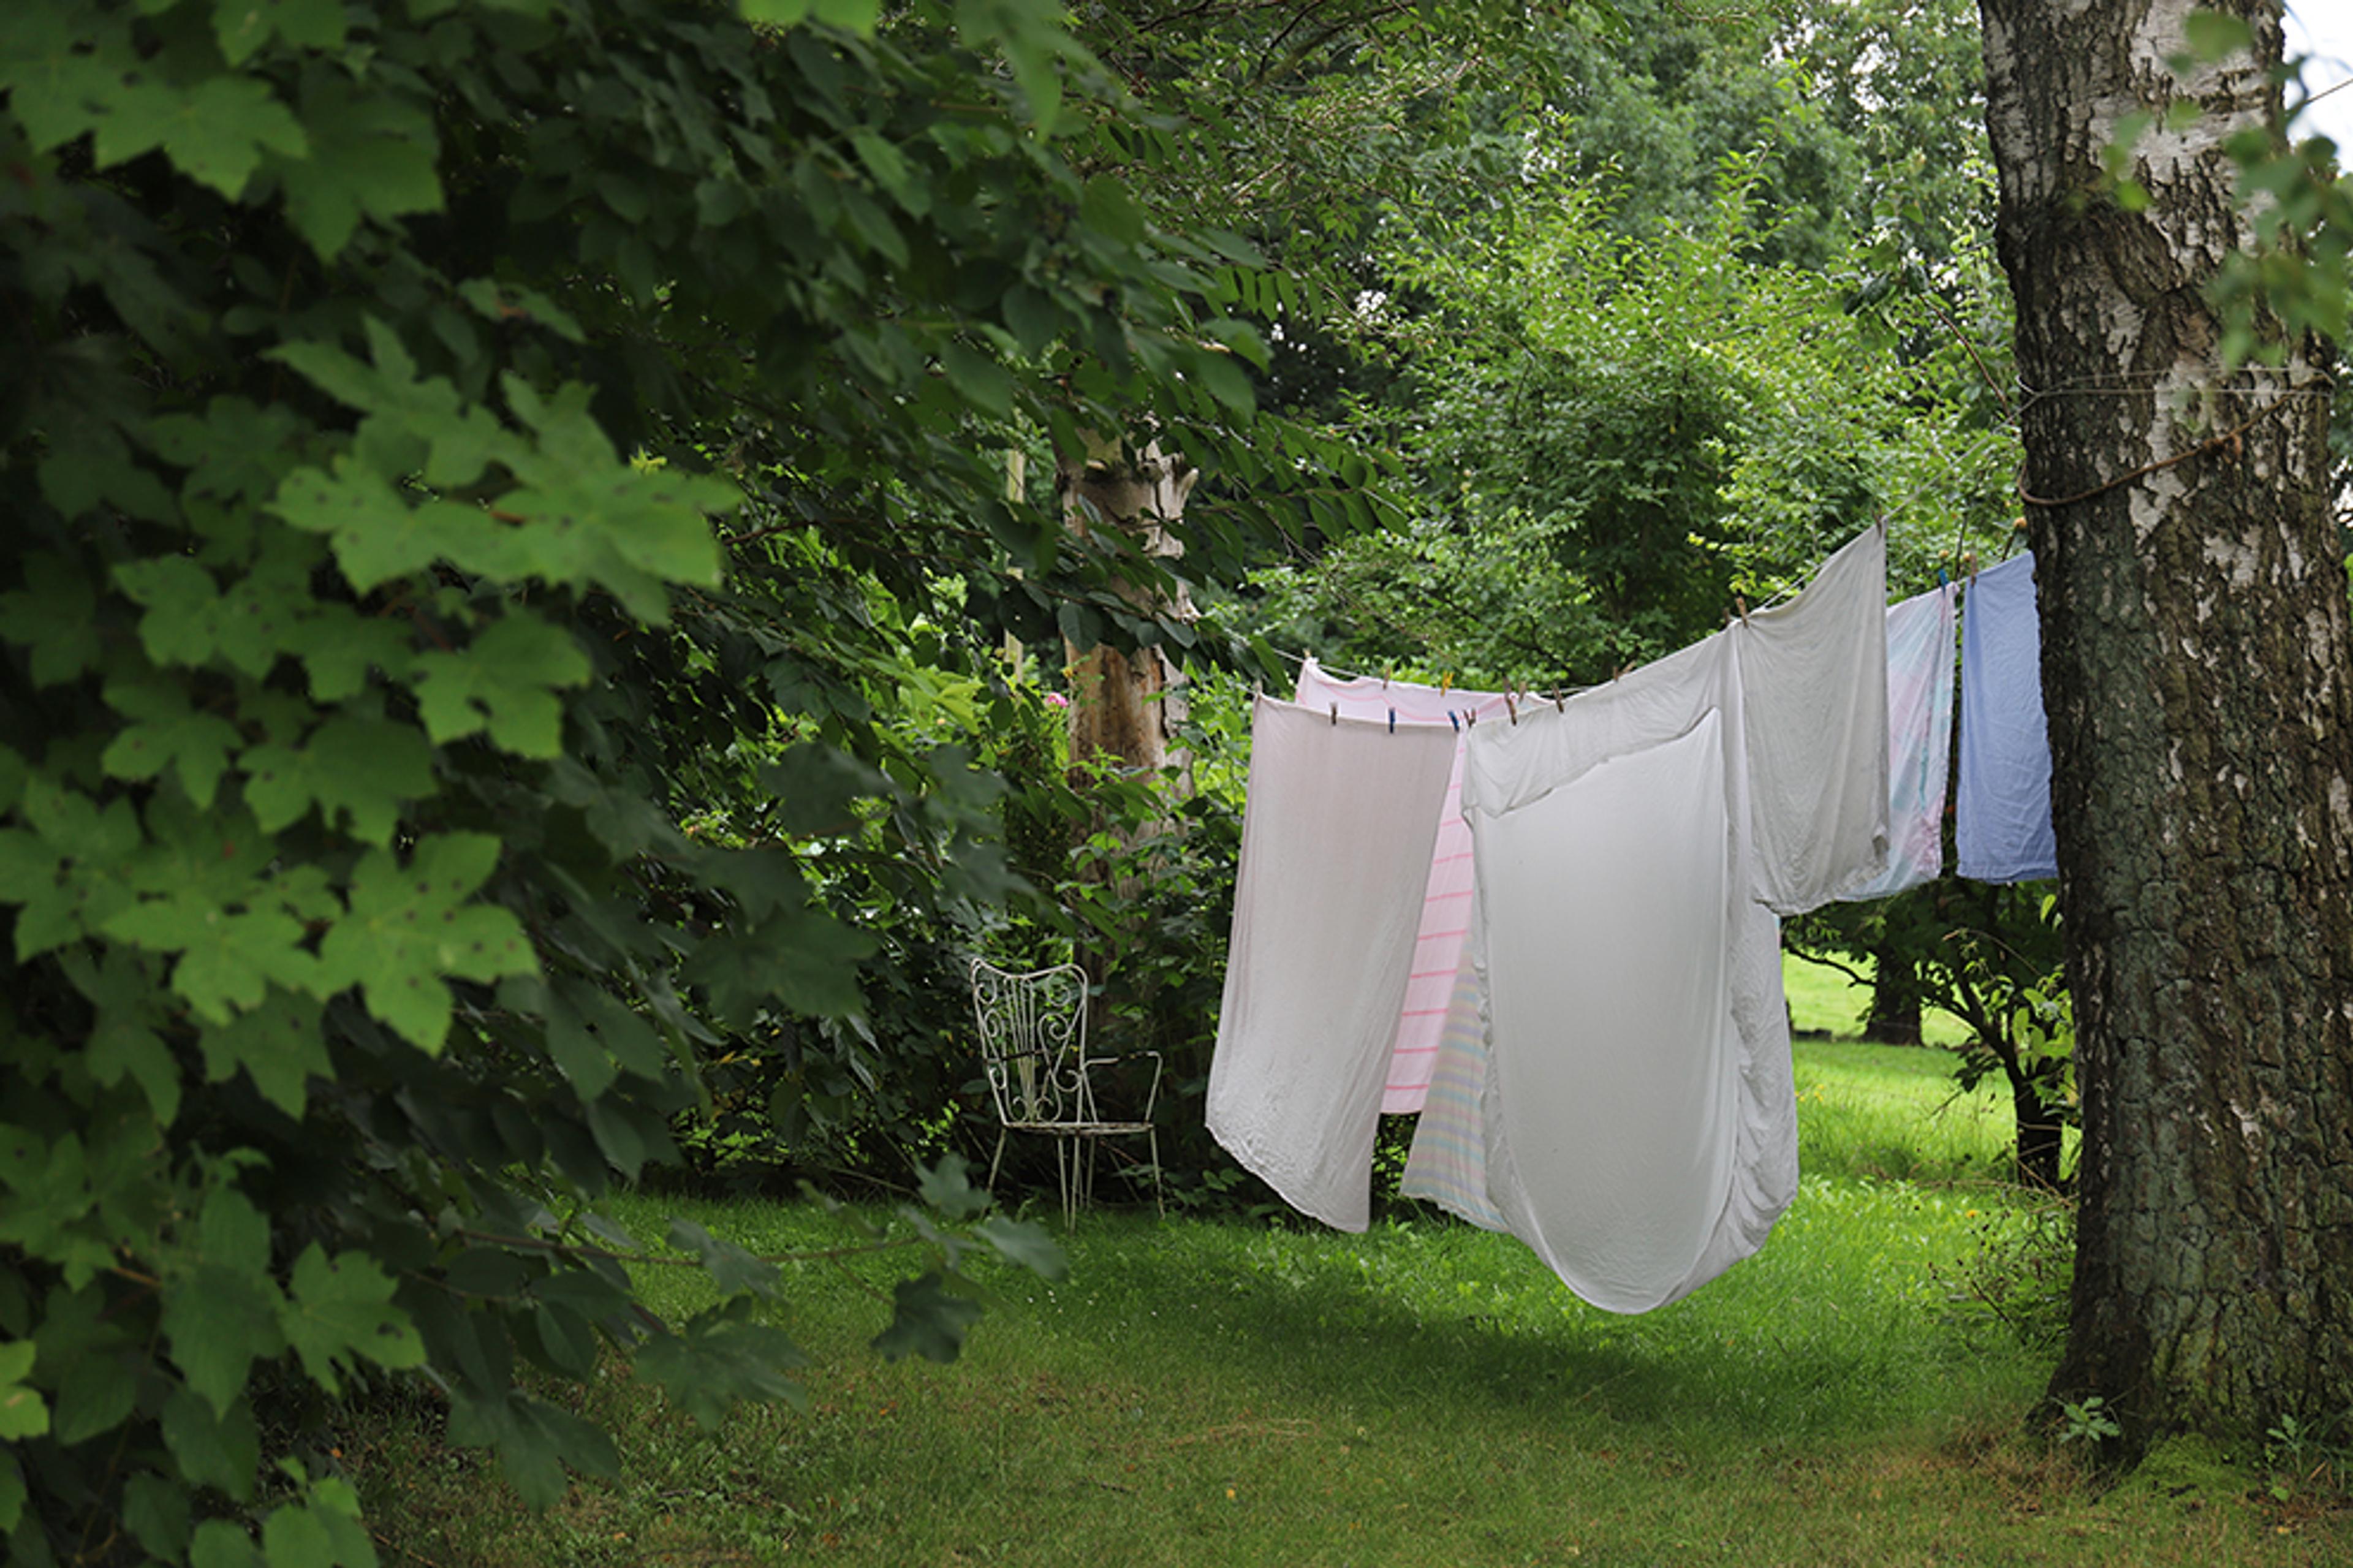 Laundry in a garden